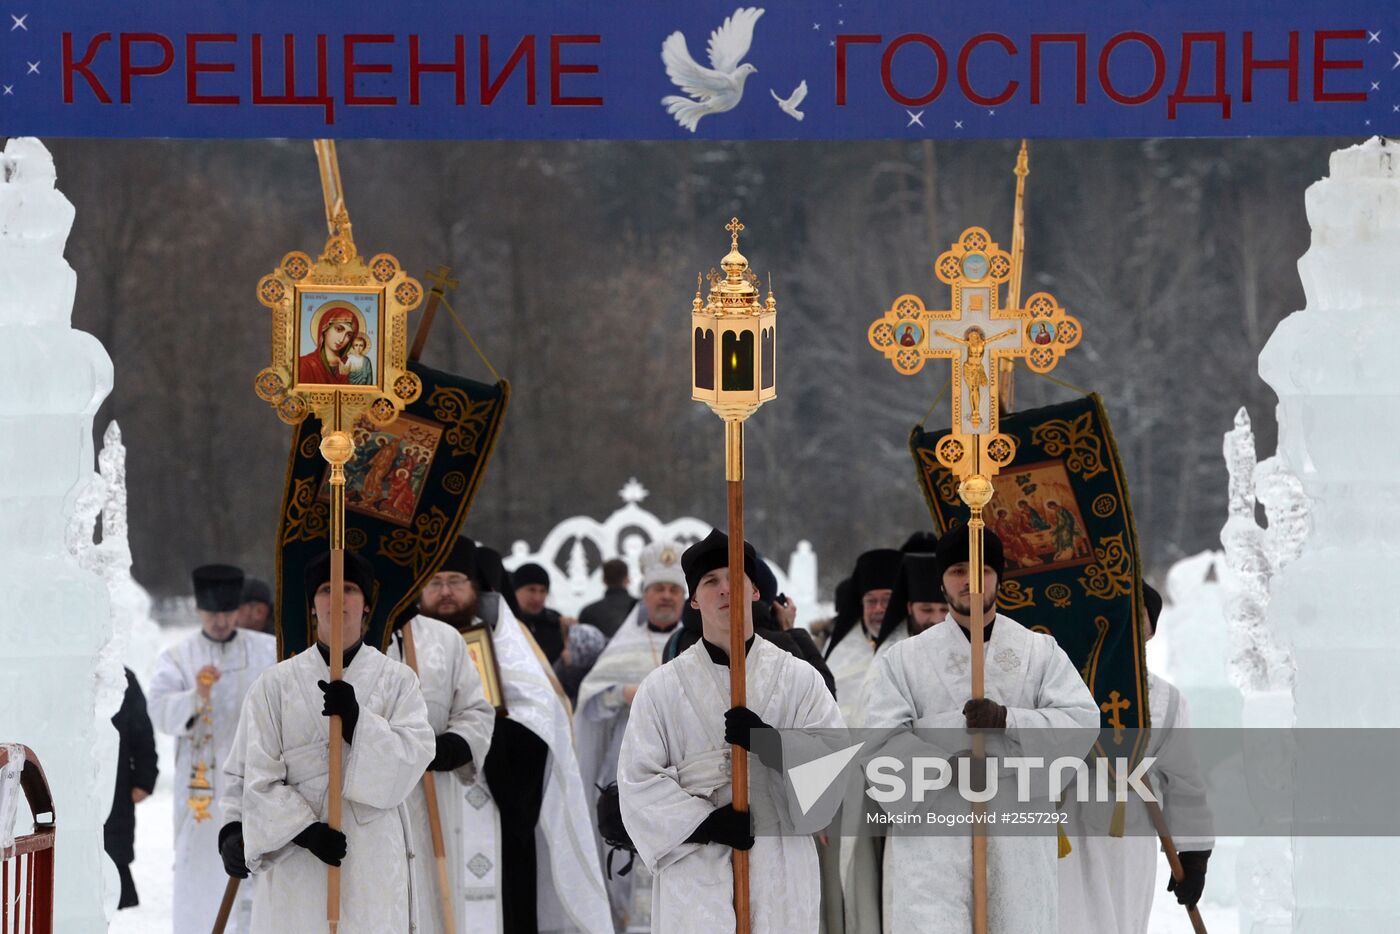 Epiphany celebrated in Russian regions